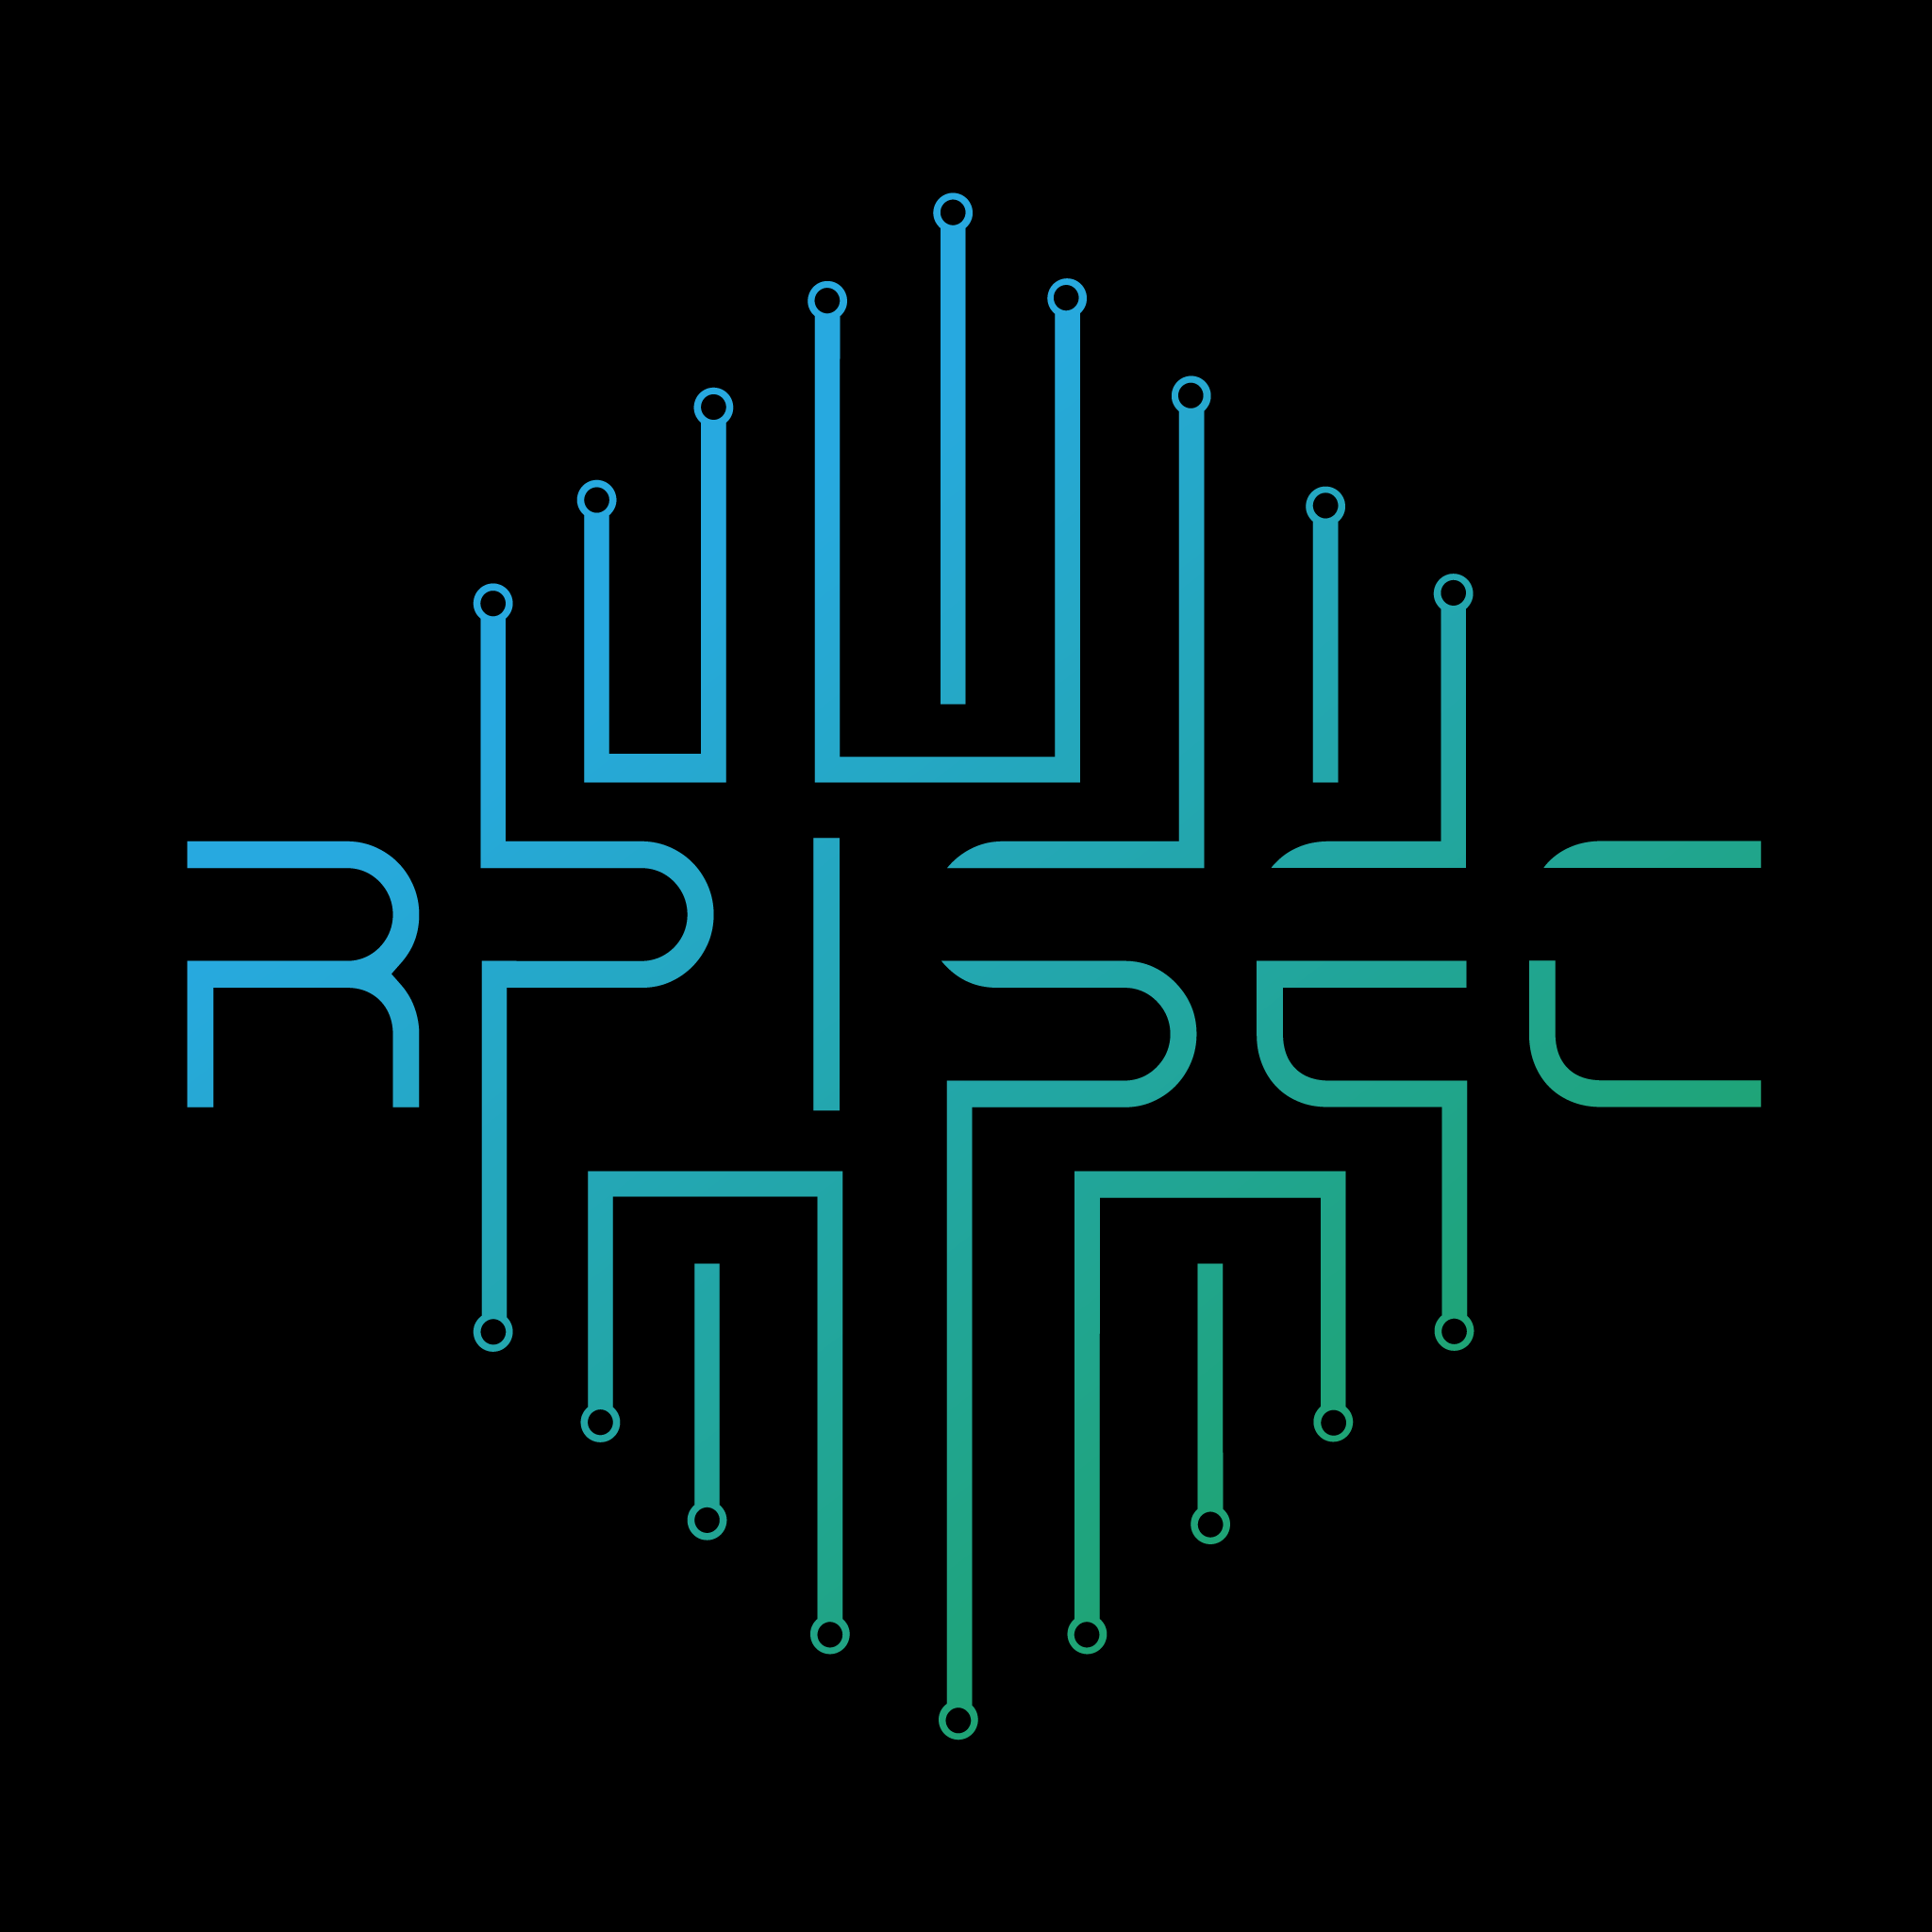 RPISEC: RPI's Cybersecurity Team